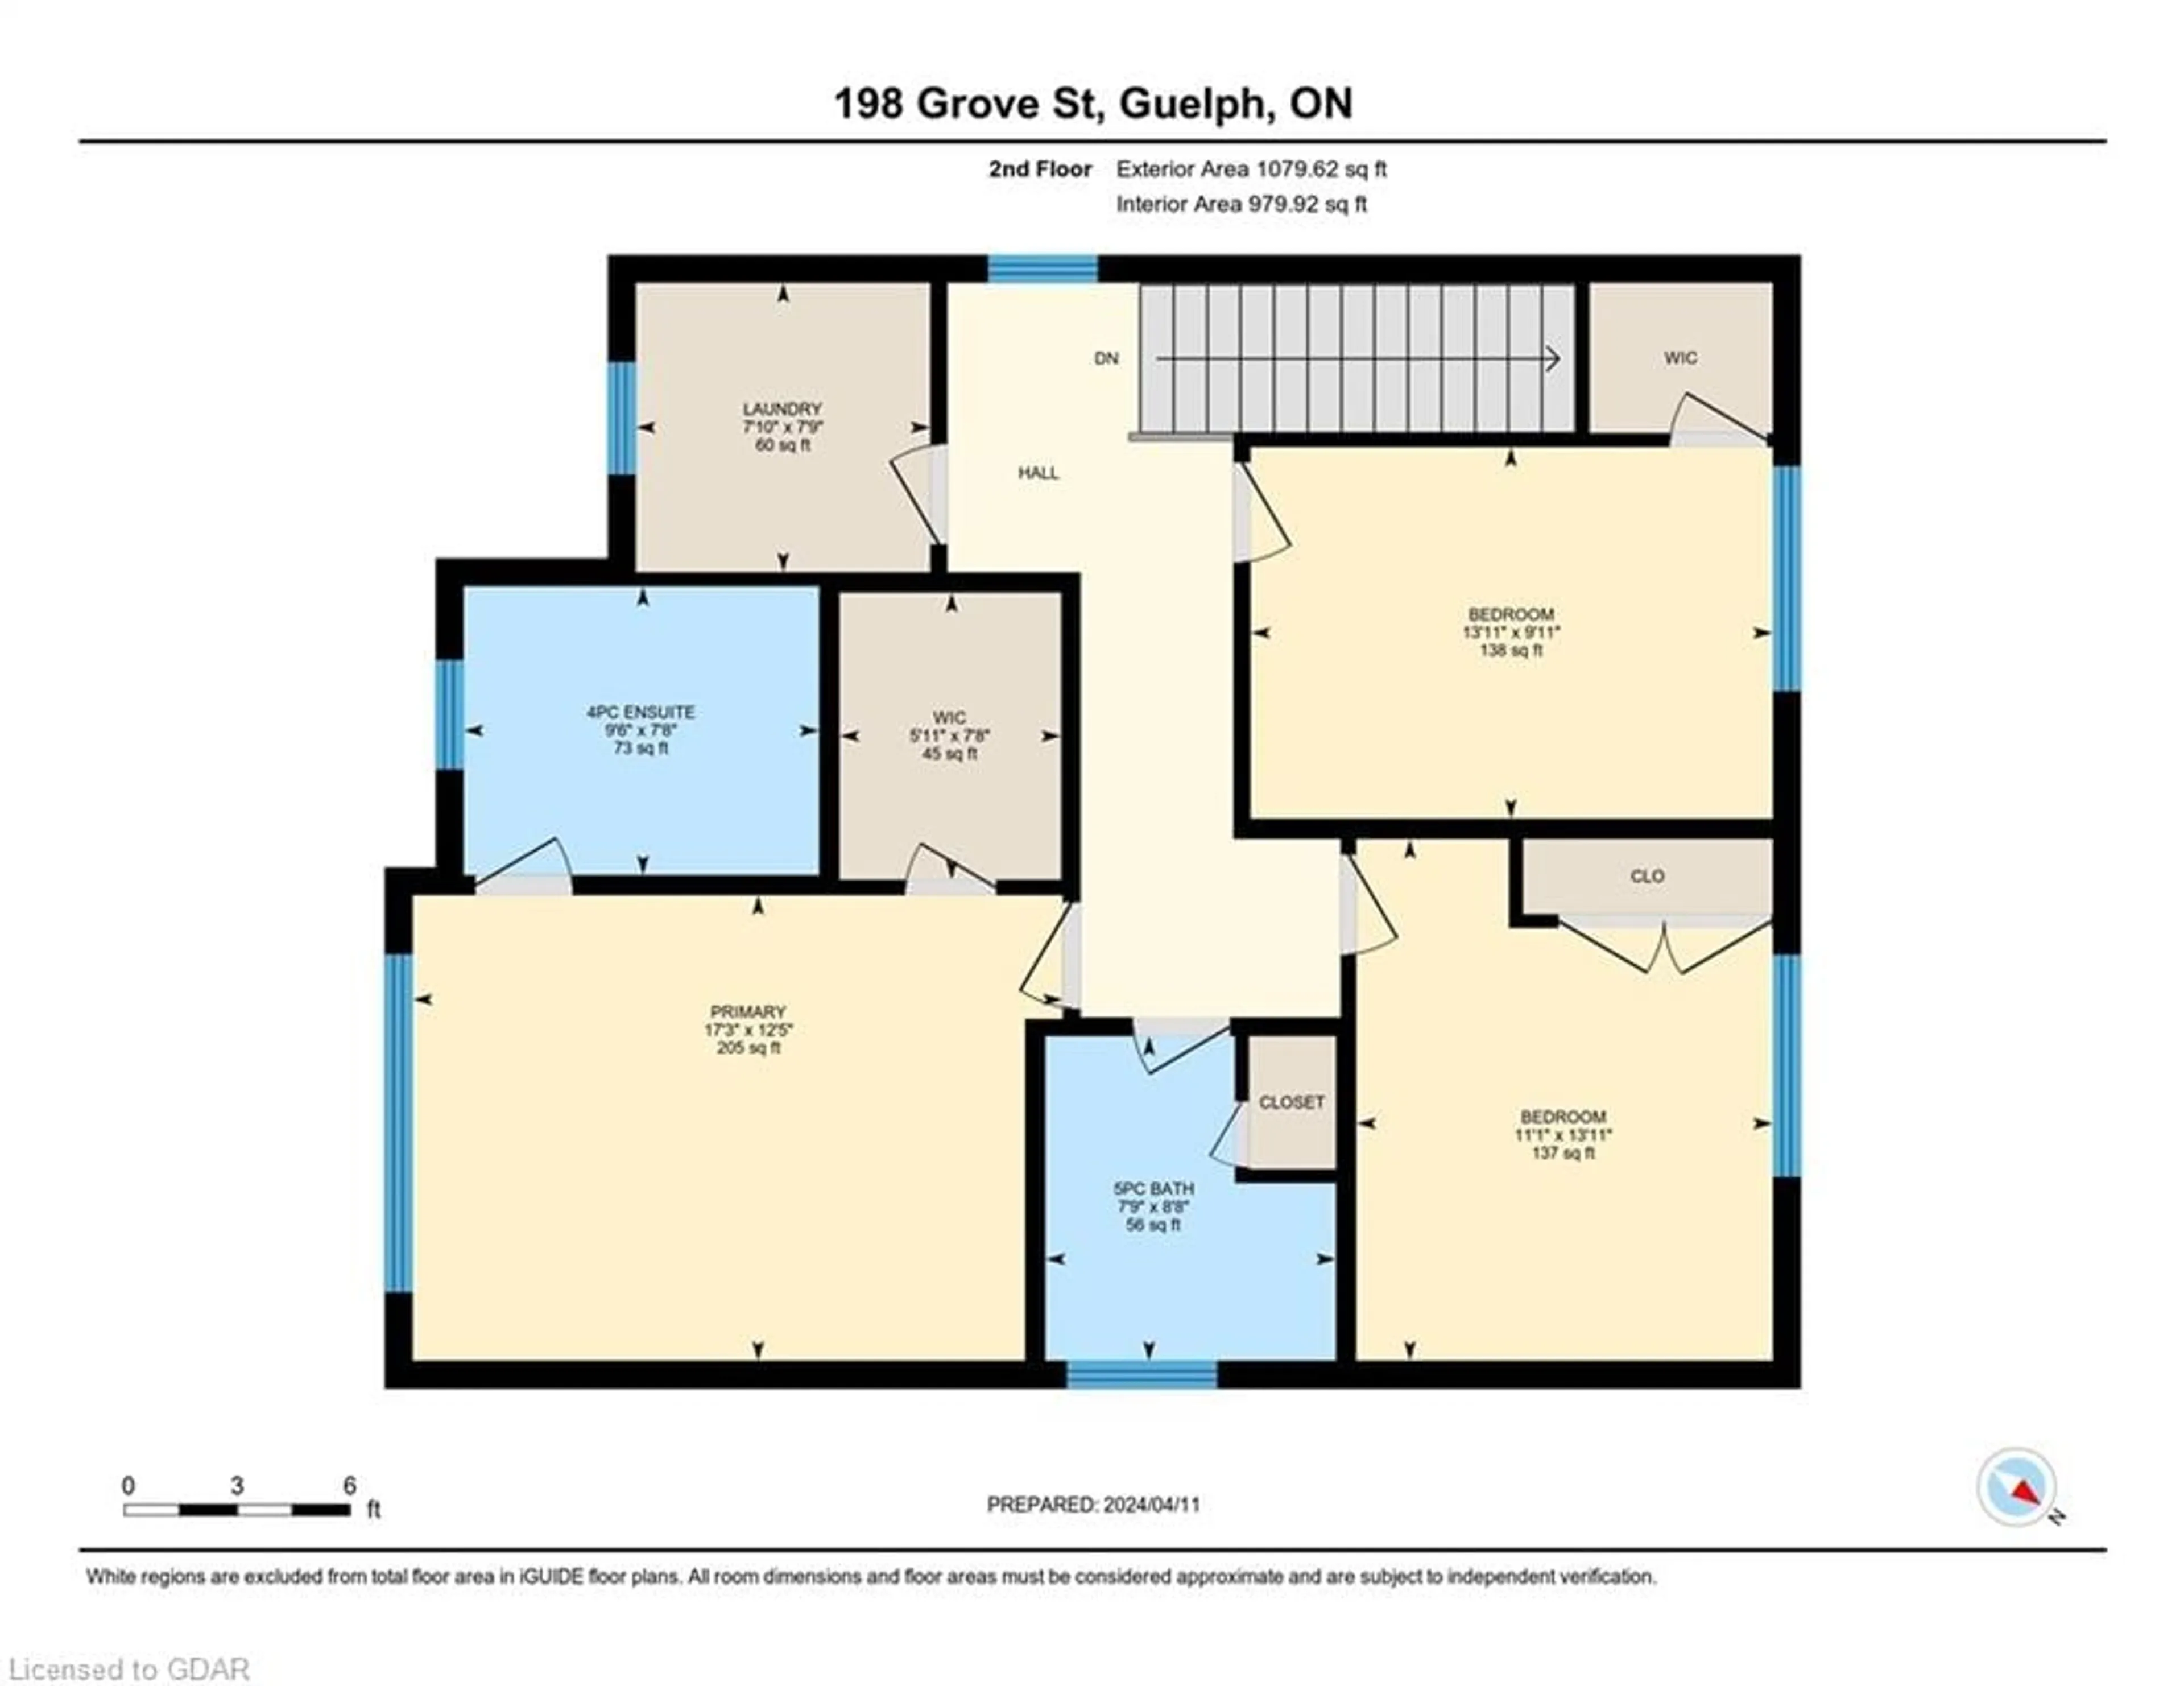 Floor plan for 198 Grove St, Guelph Ontario N1E 2W7